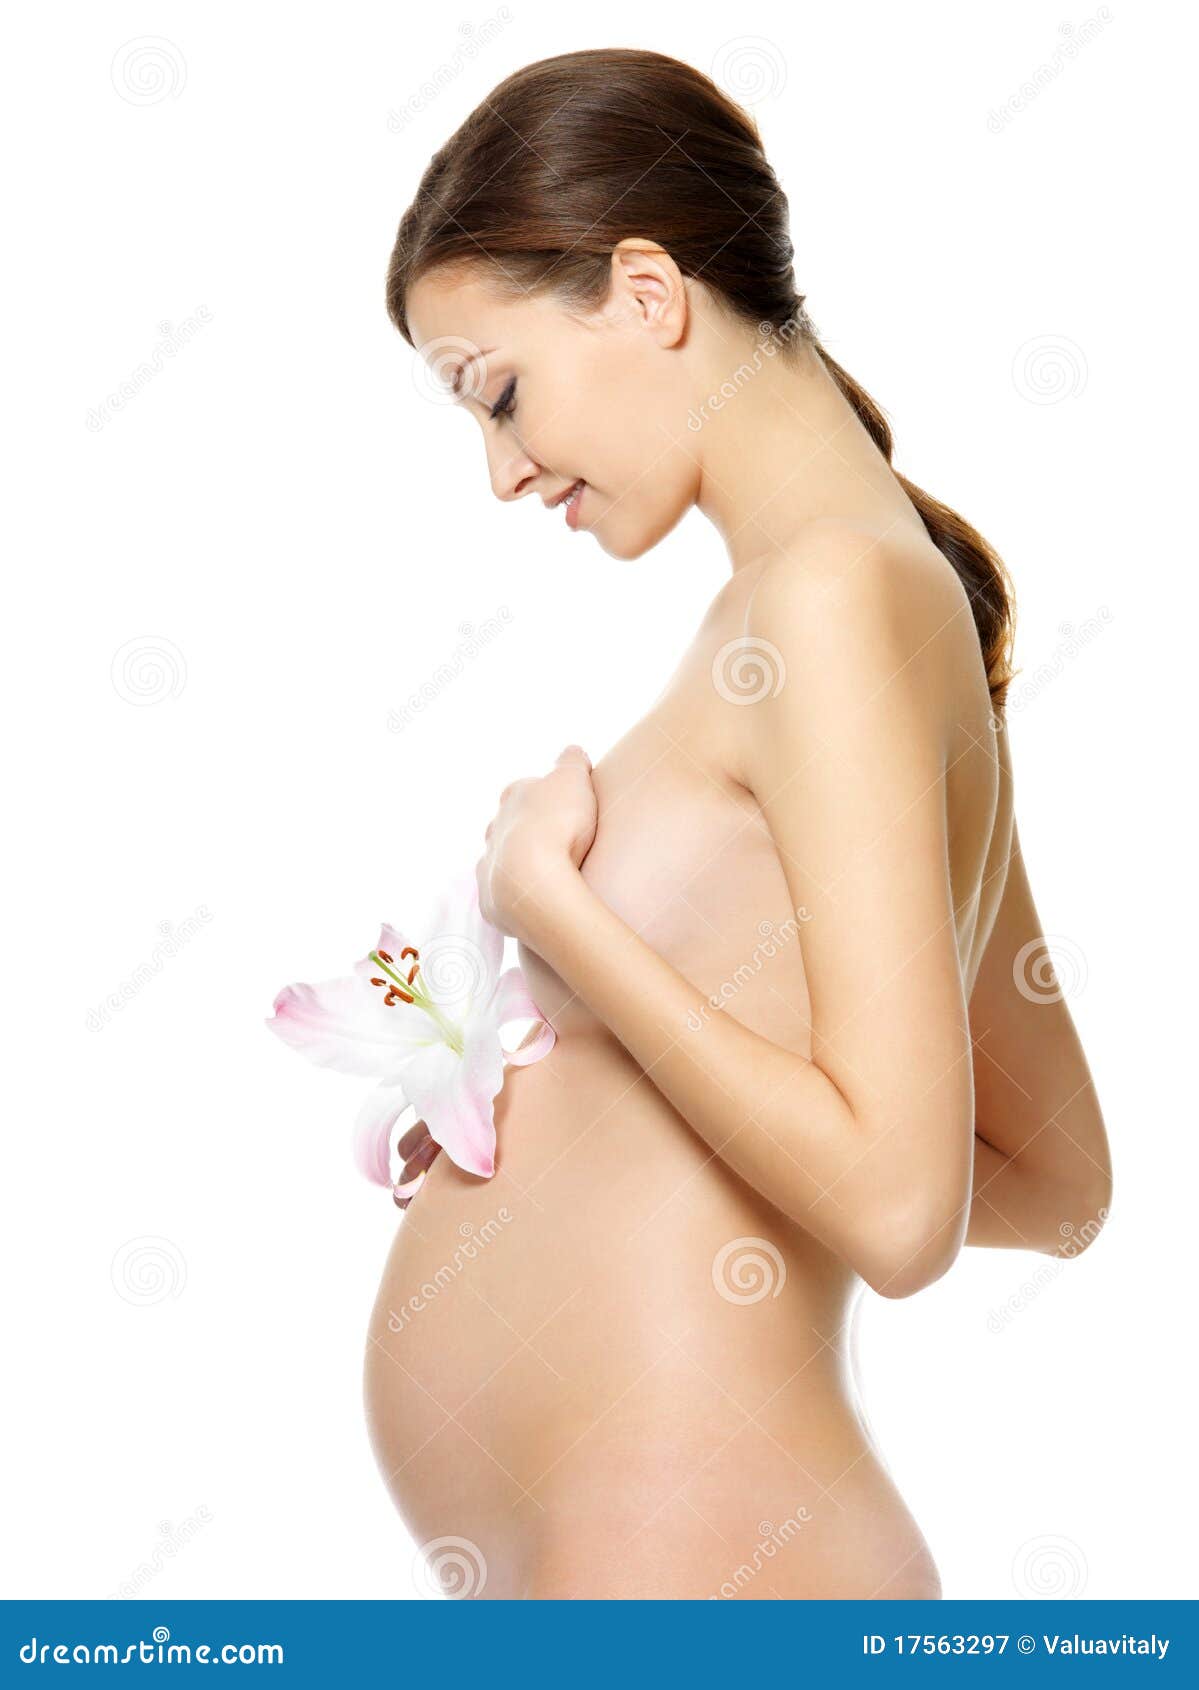 Hot Nude Pregnant Women 112